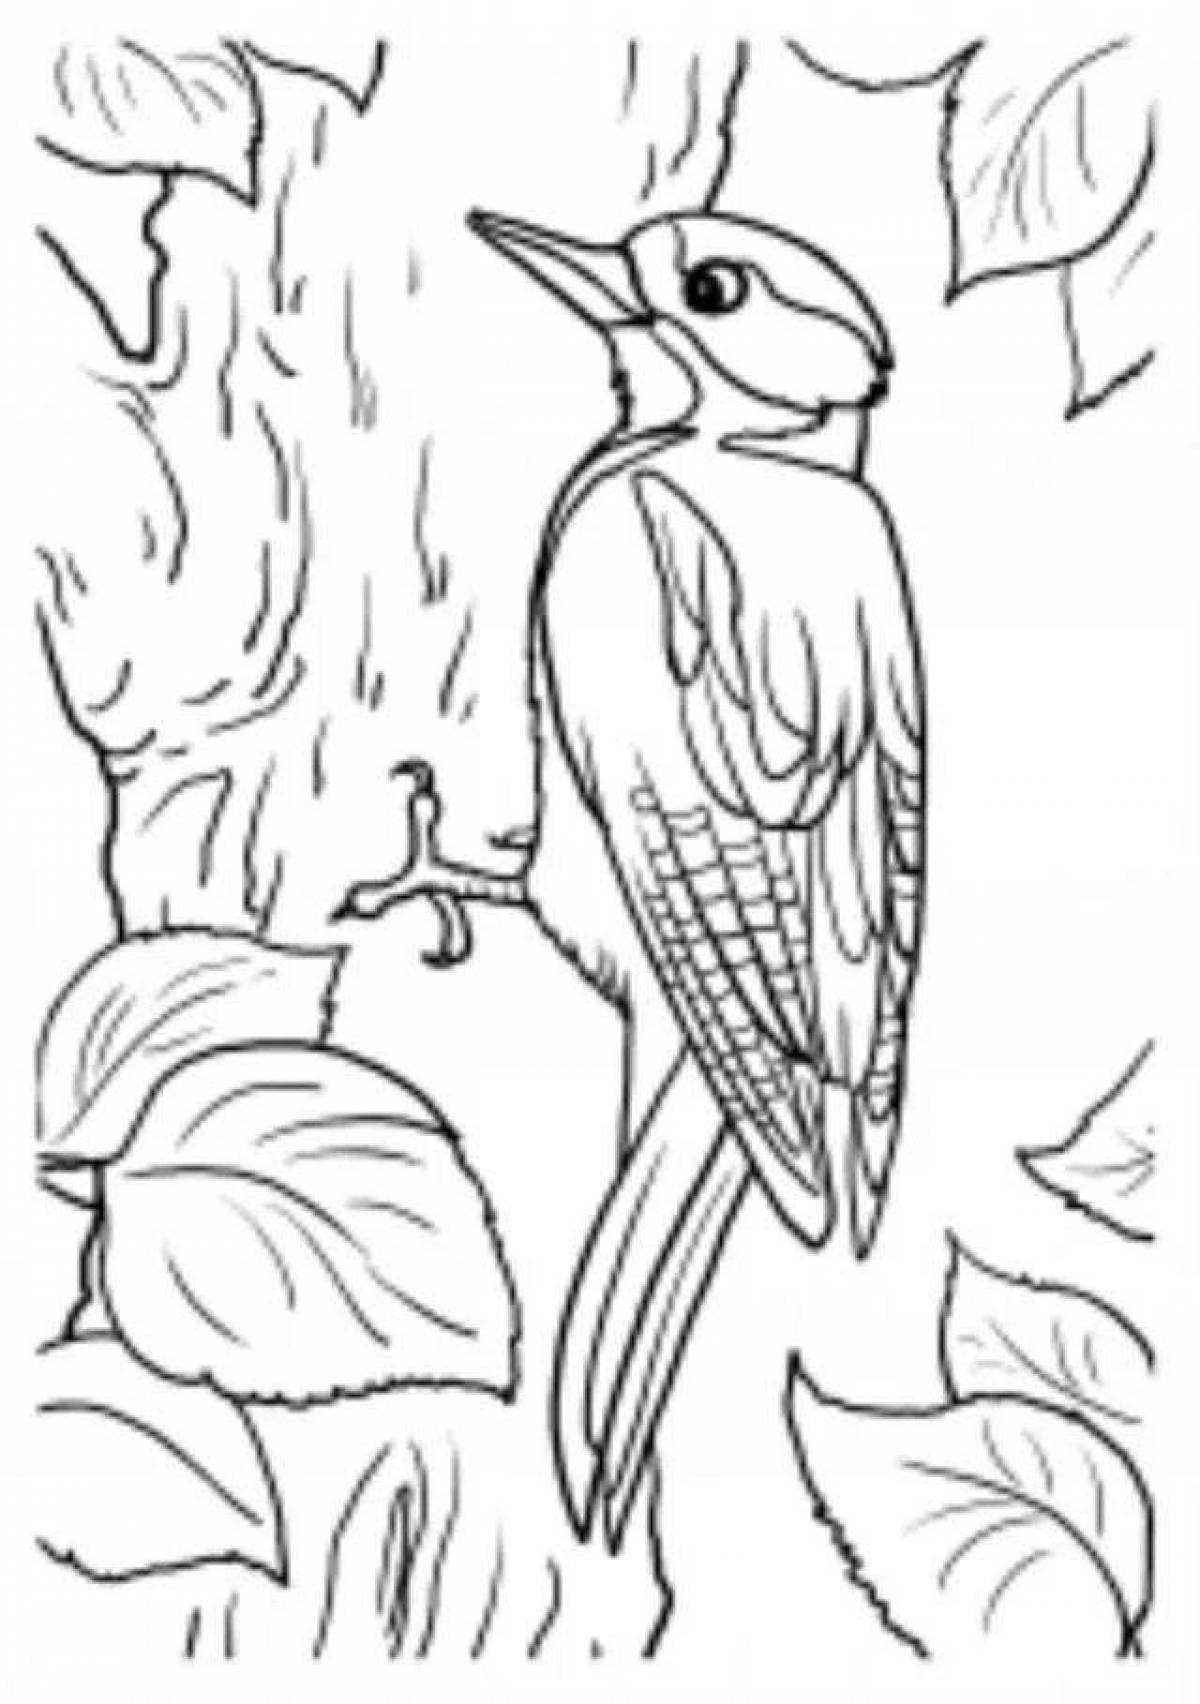 Living woodpecker on a tree